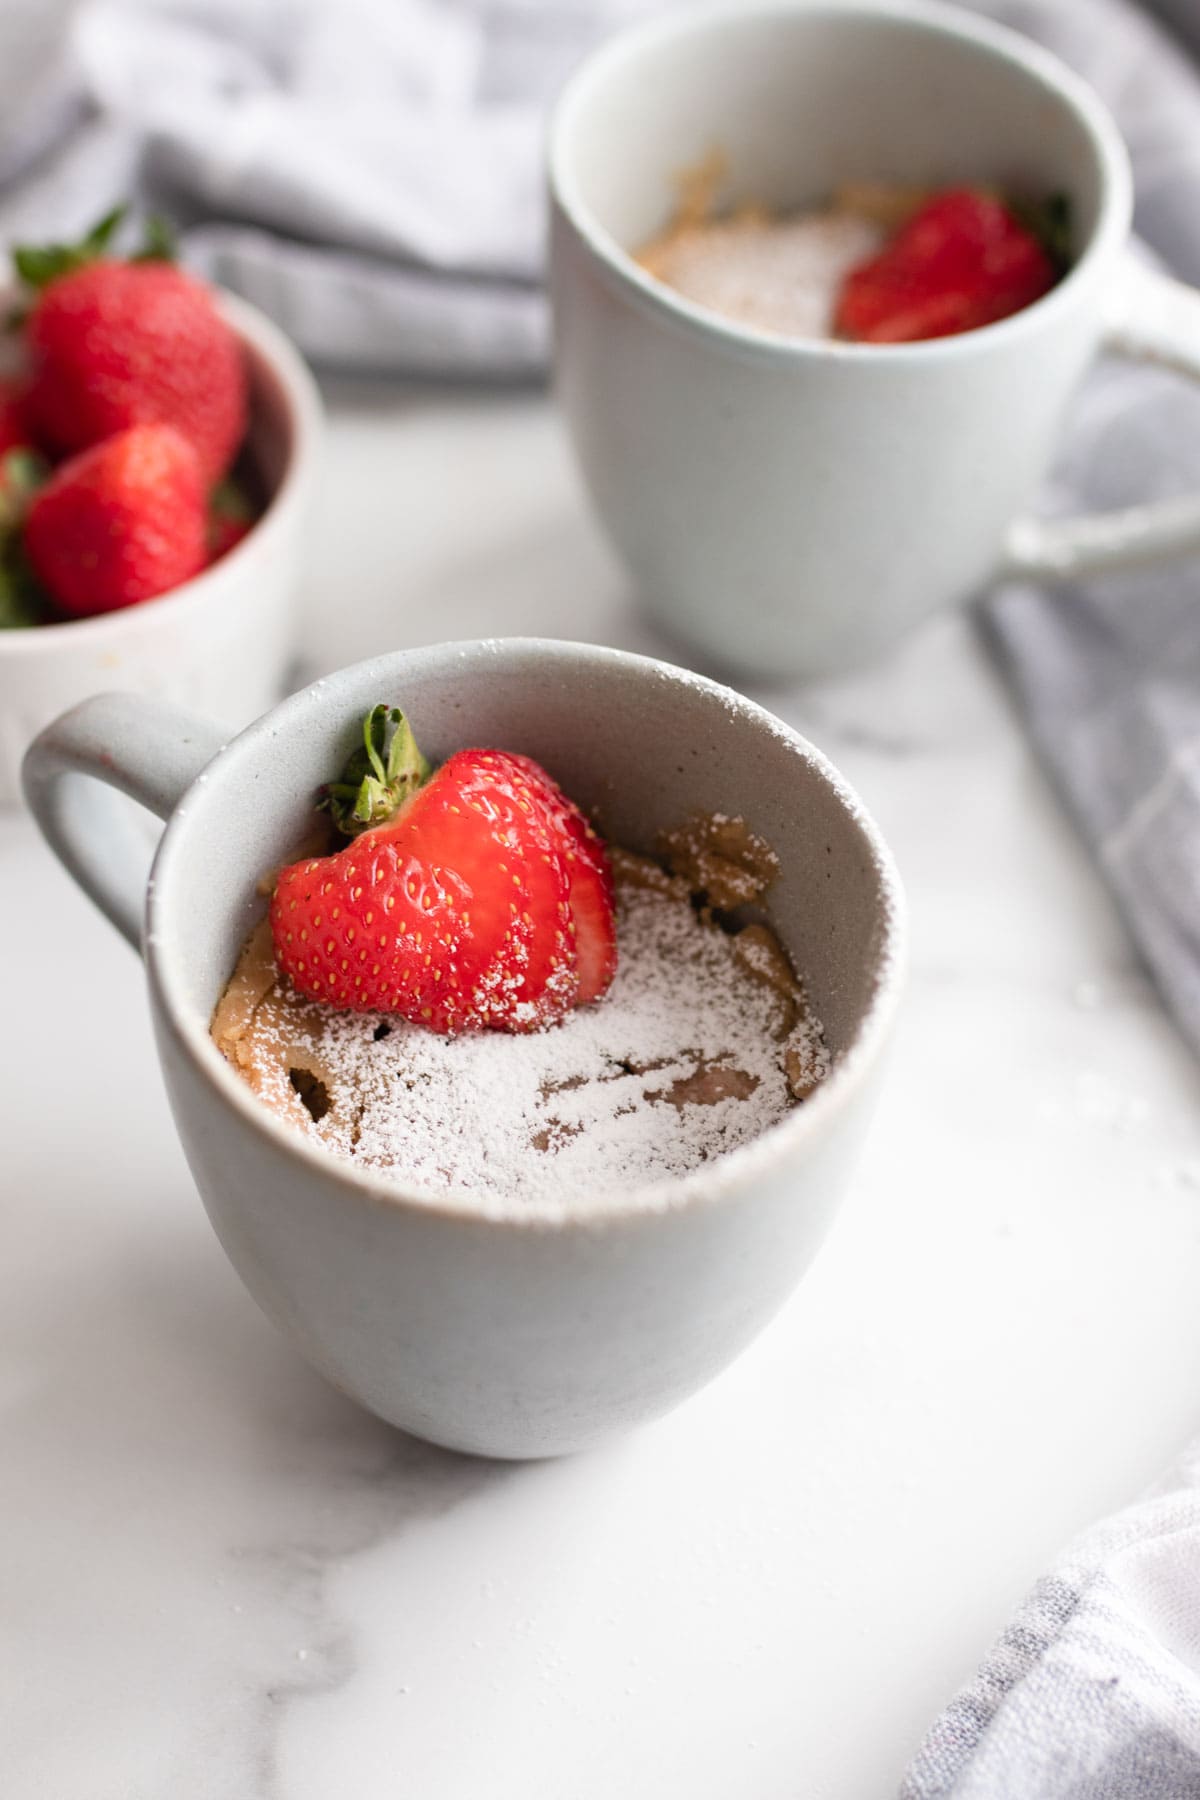 Microwave mug cake with powdered sugar and strawberries on top.